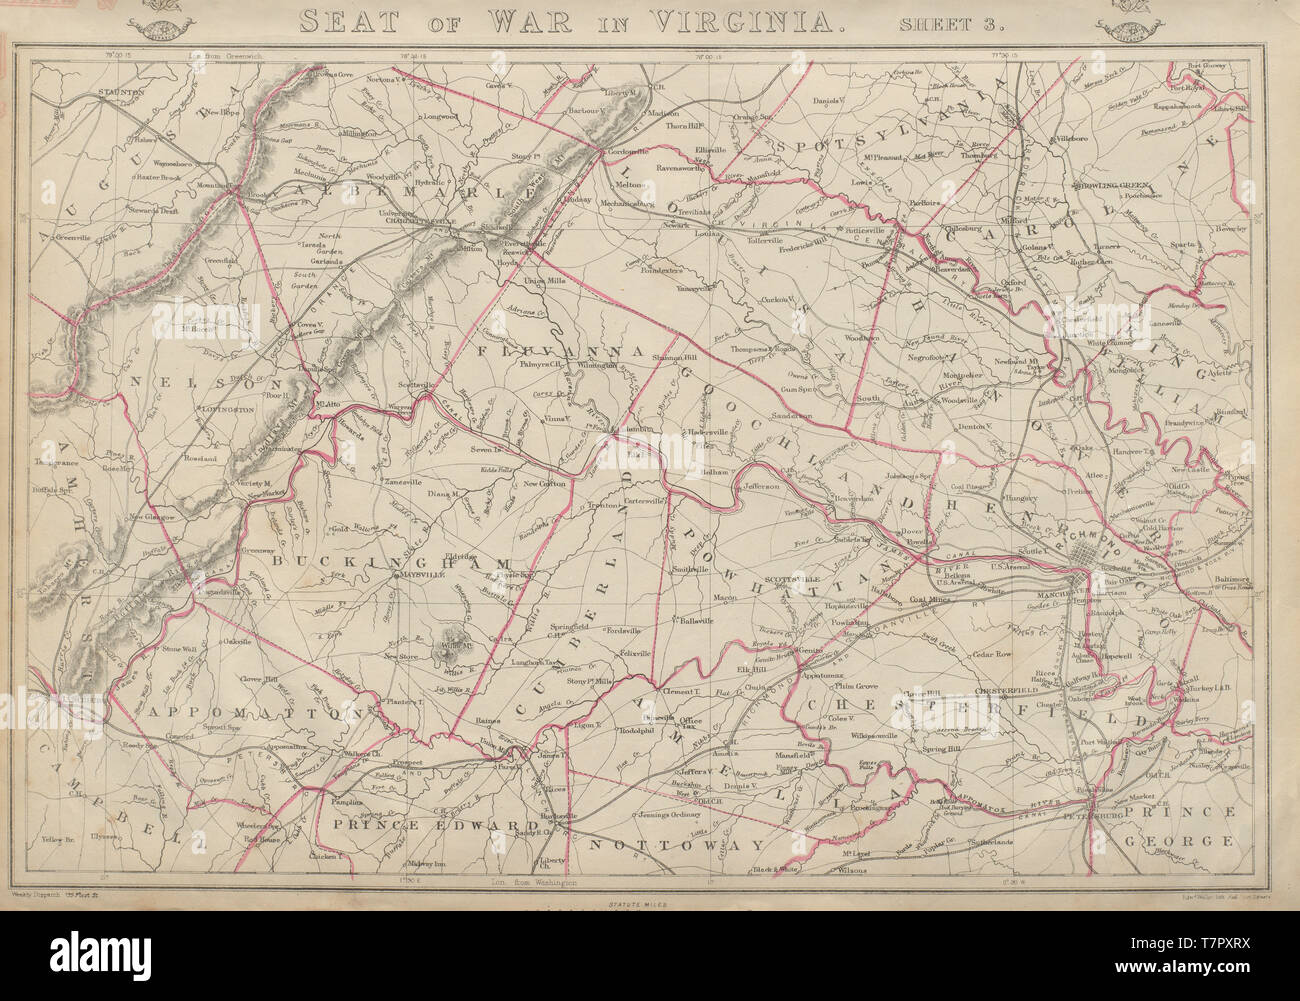 US CIVIL WAR Seat of War in Virginia sheet 3 Richmond Lynchburg. WELLER  1863 map Stock Photo - Alamy